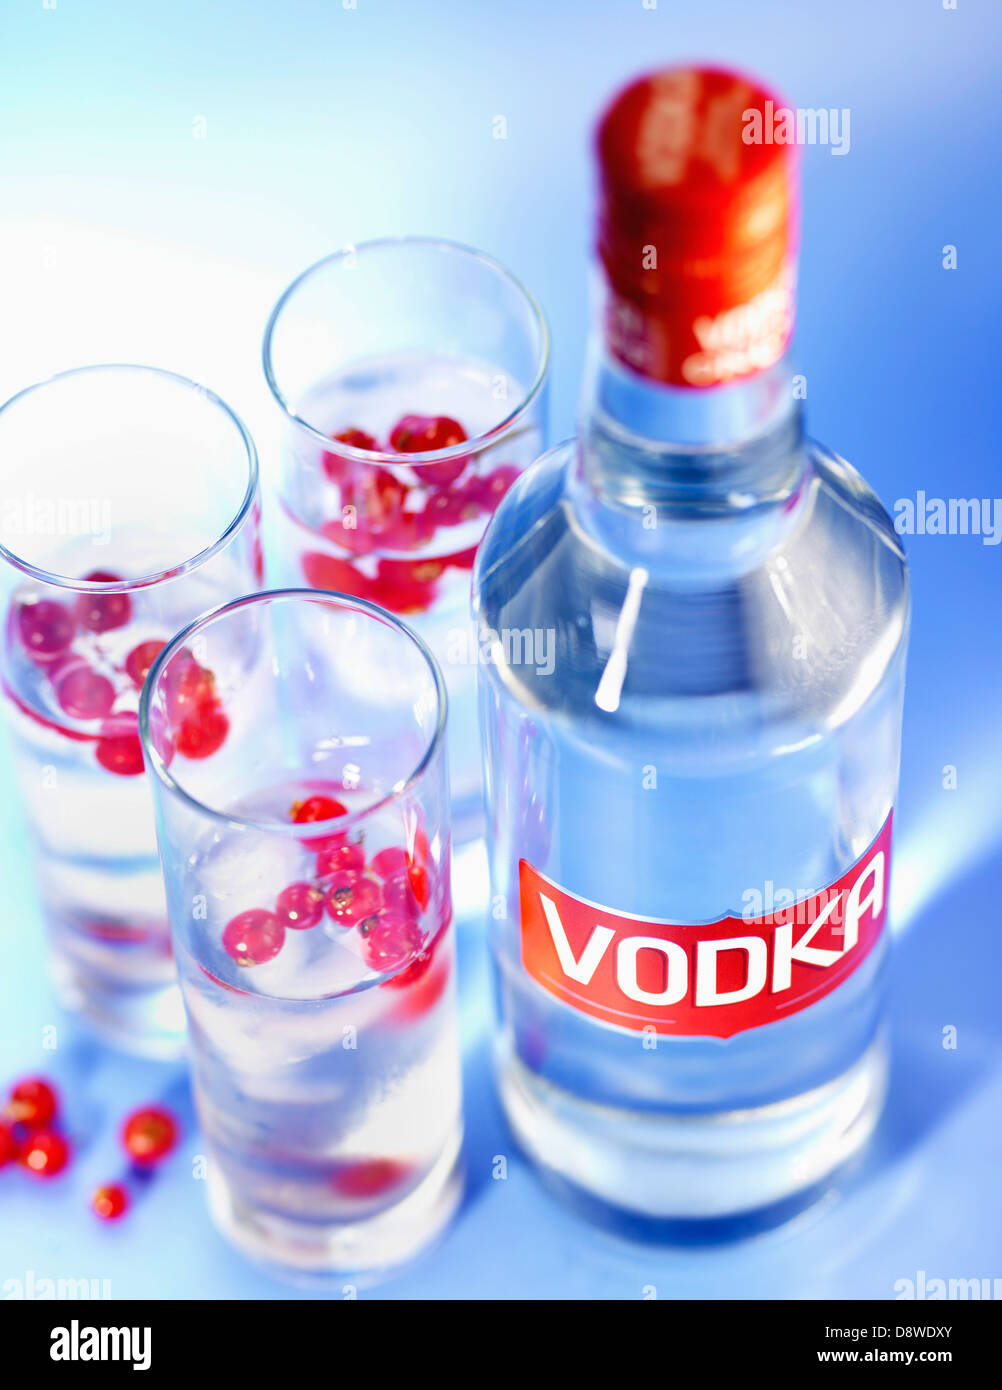 Bottle and glasses of Vodka Stock Photo